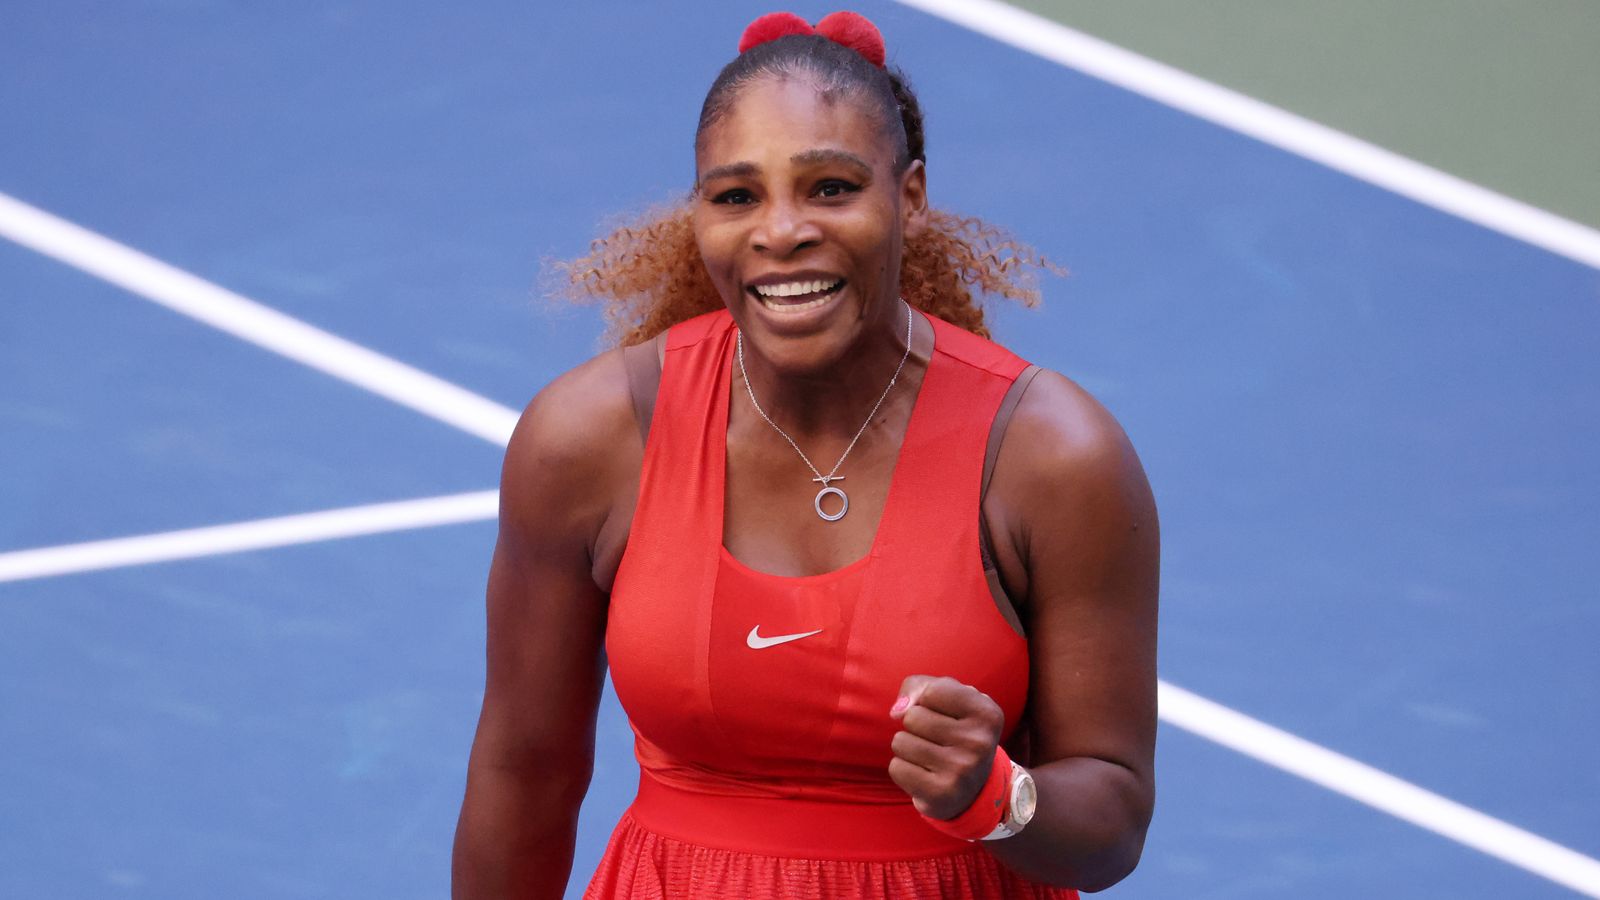 Serena Williams - Serena Williams says 